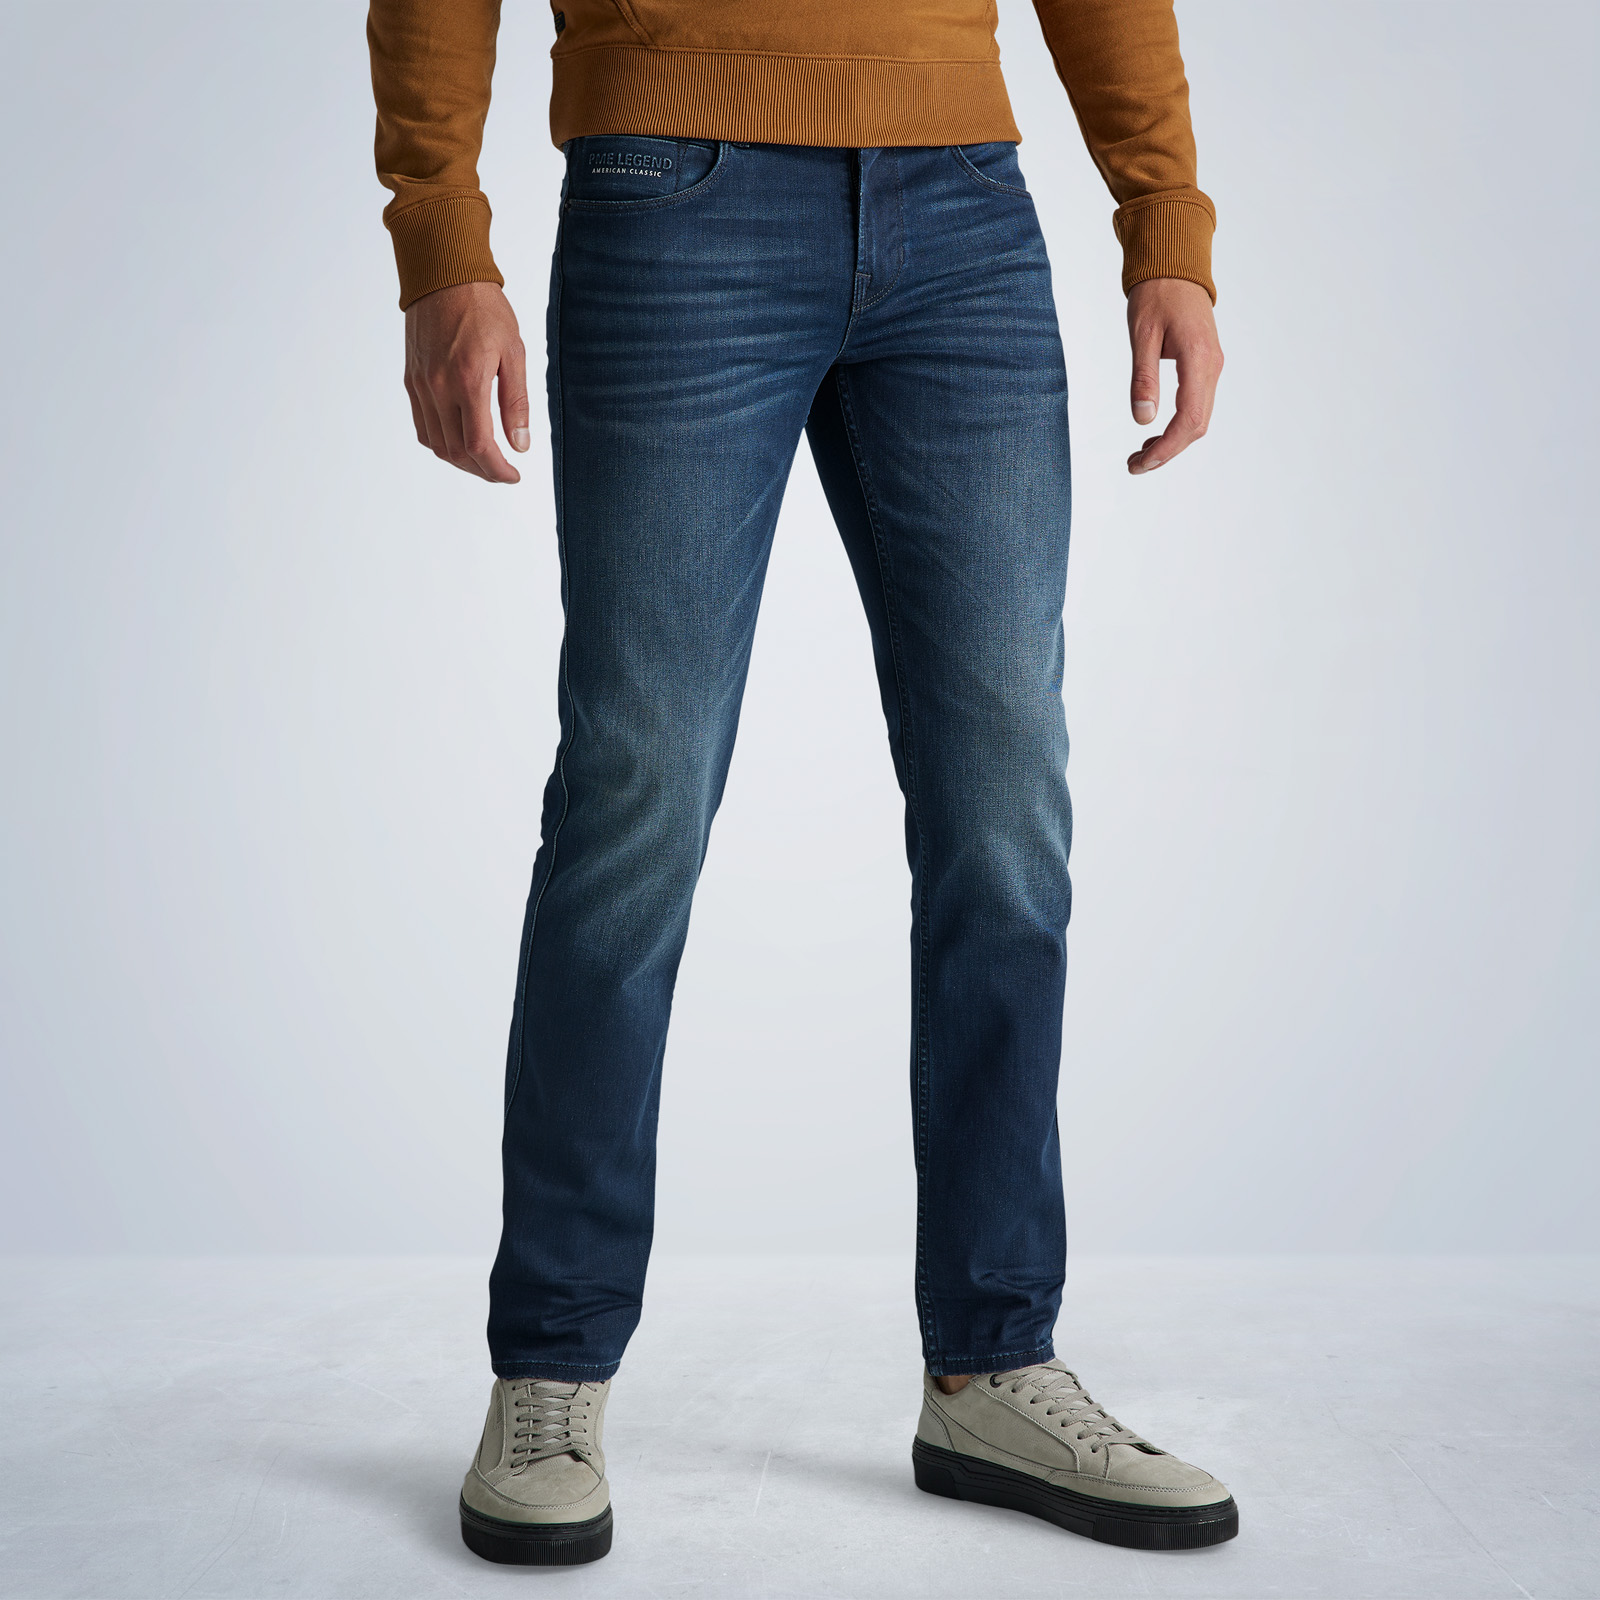 prototype Knikken knoop PME JEANS | PME Legend Nightflight Blue Wash Jeans | Free shipping and  returns